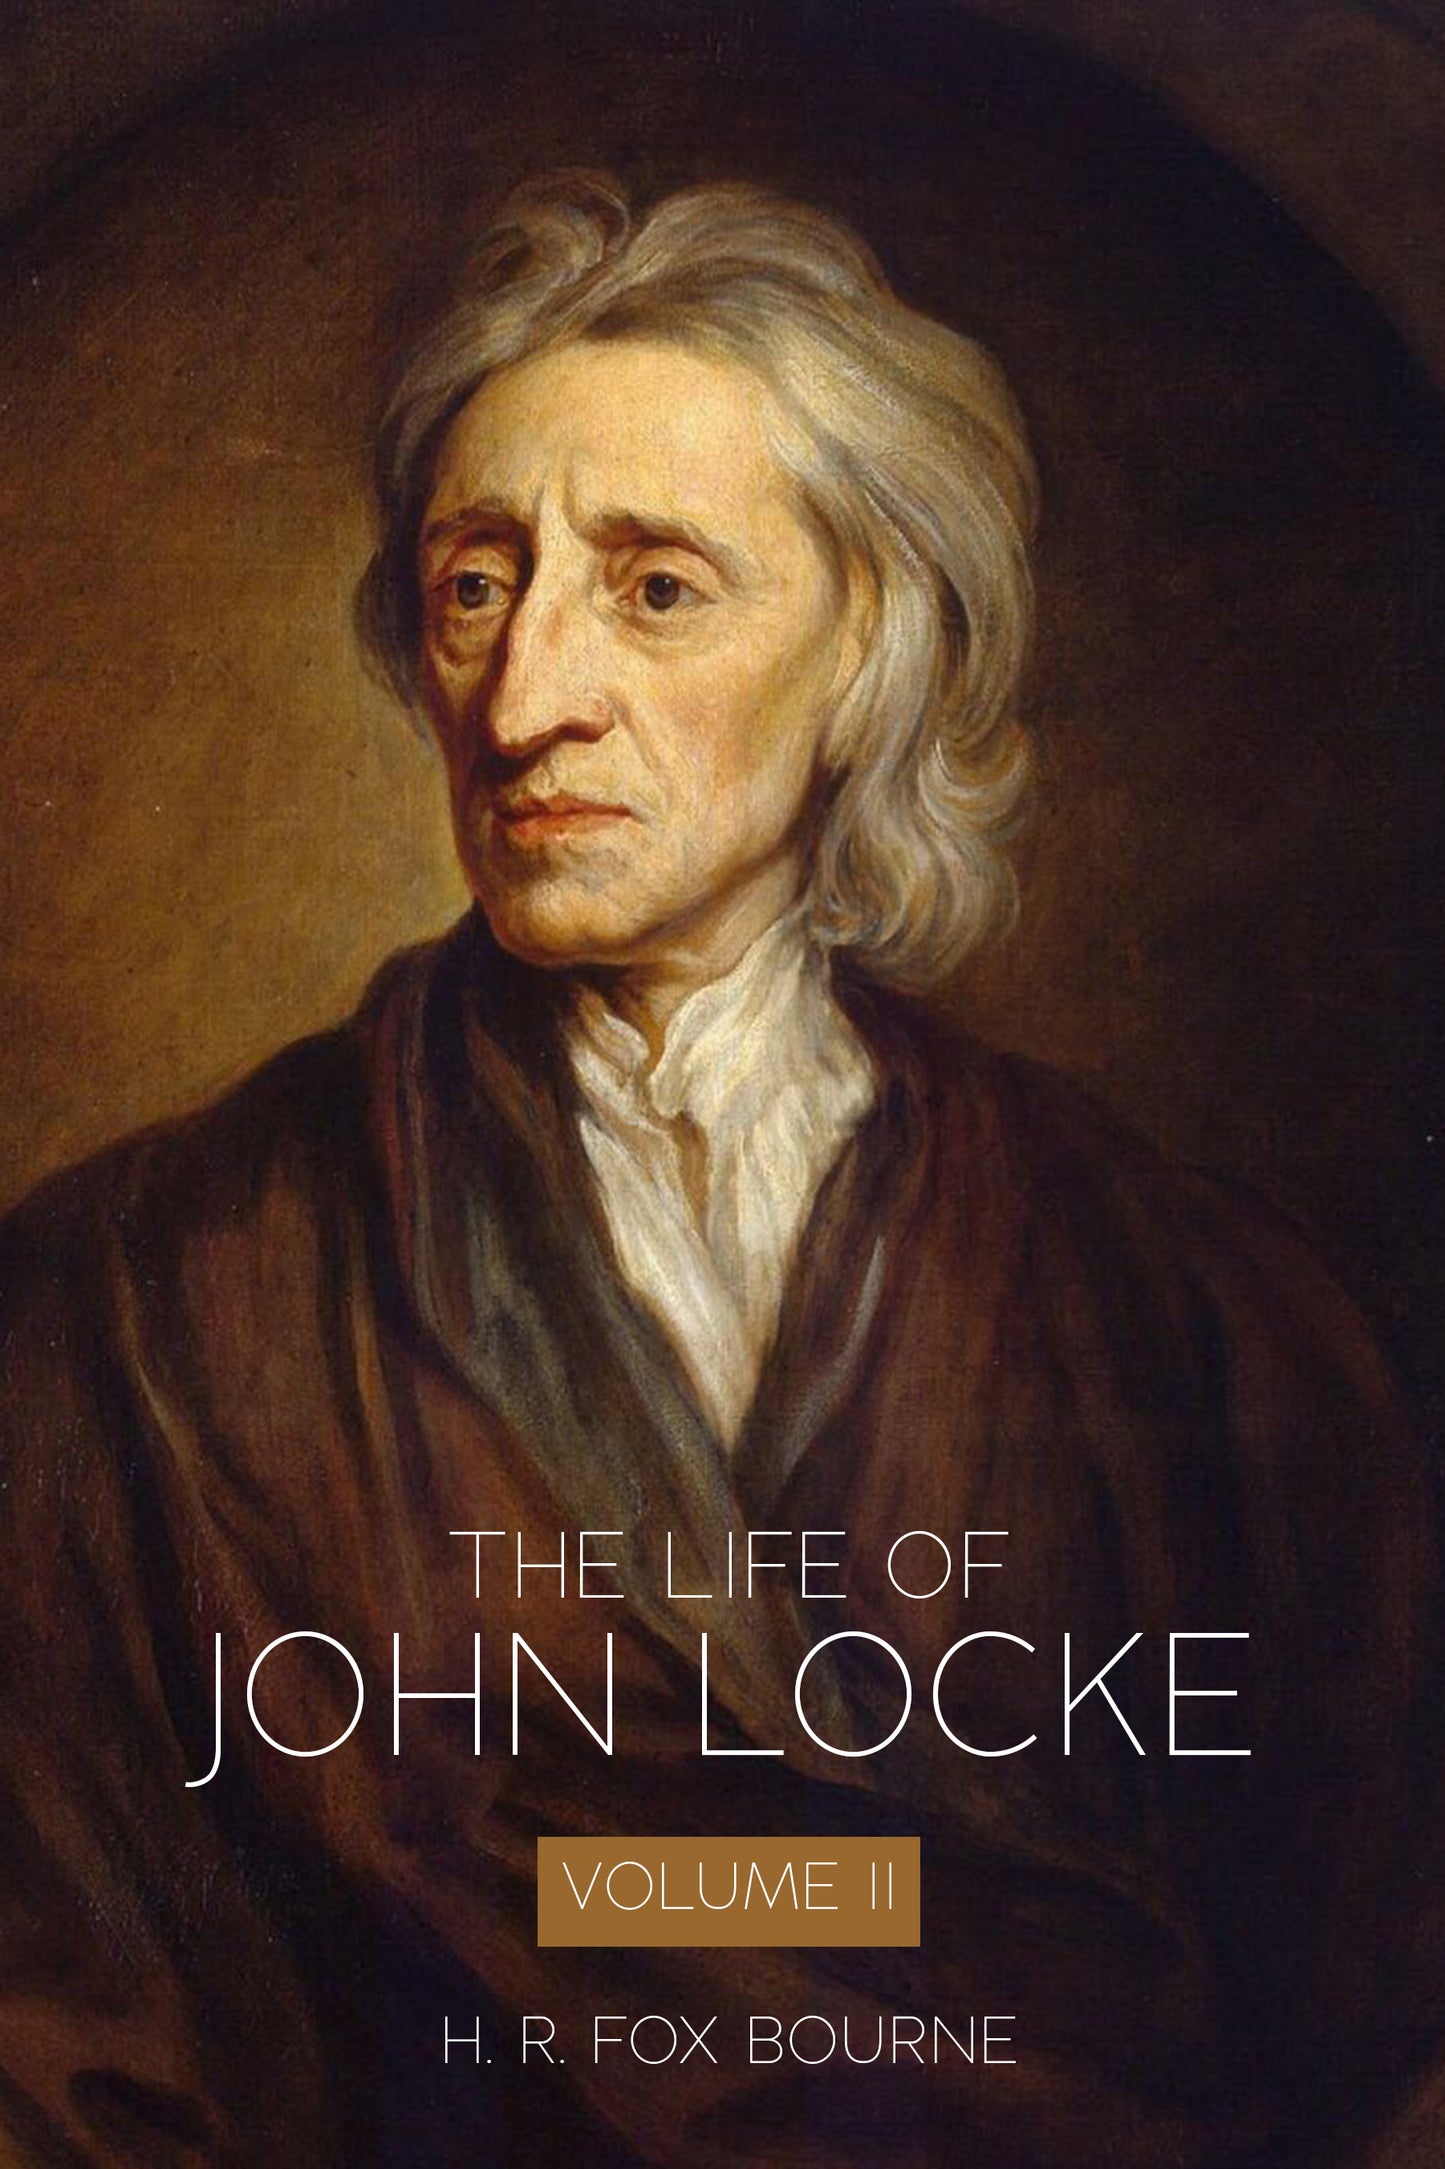 The Life of John Locke Volume II